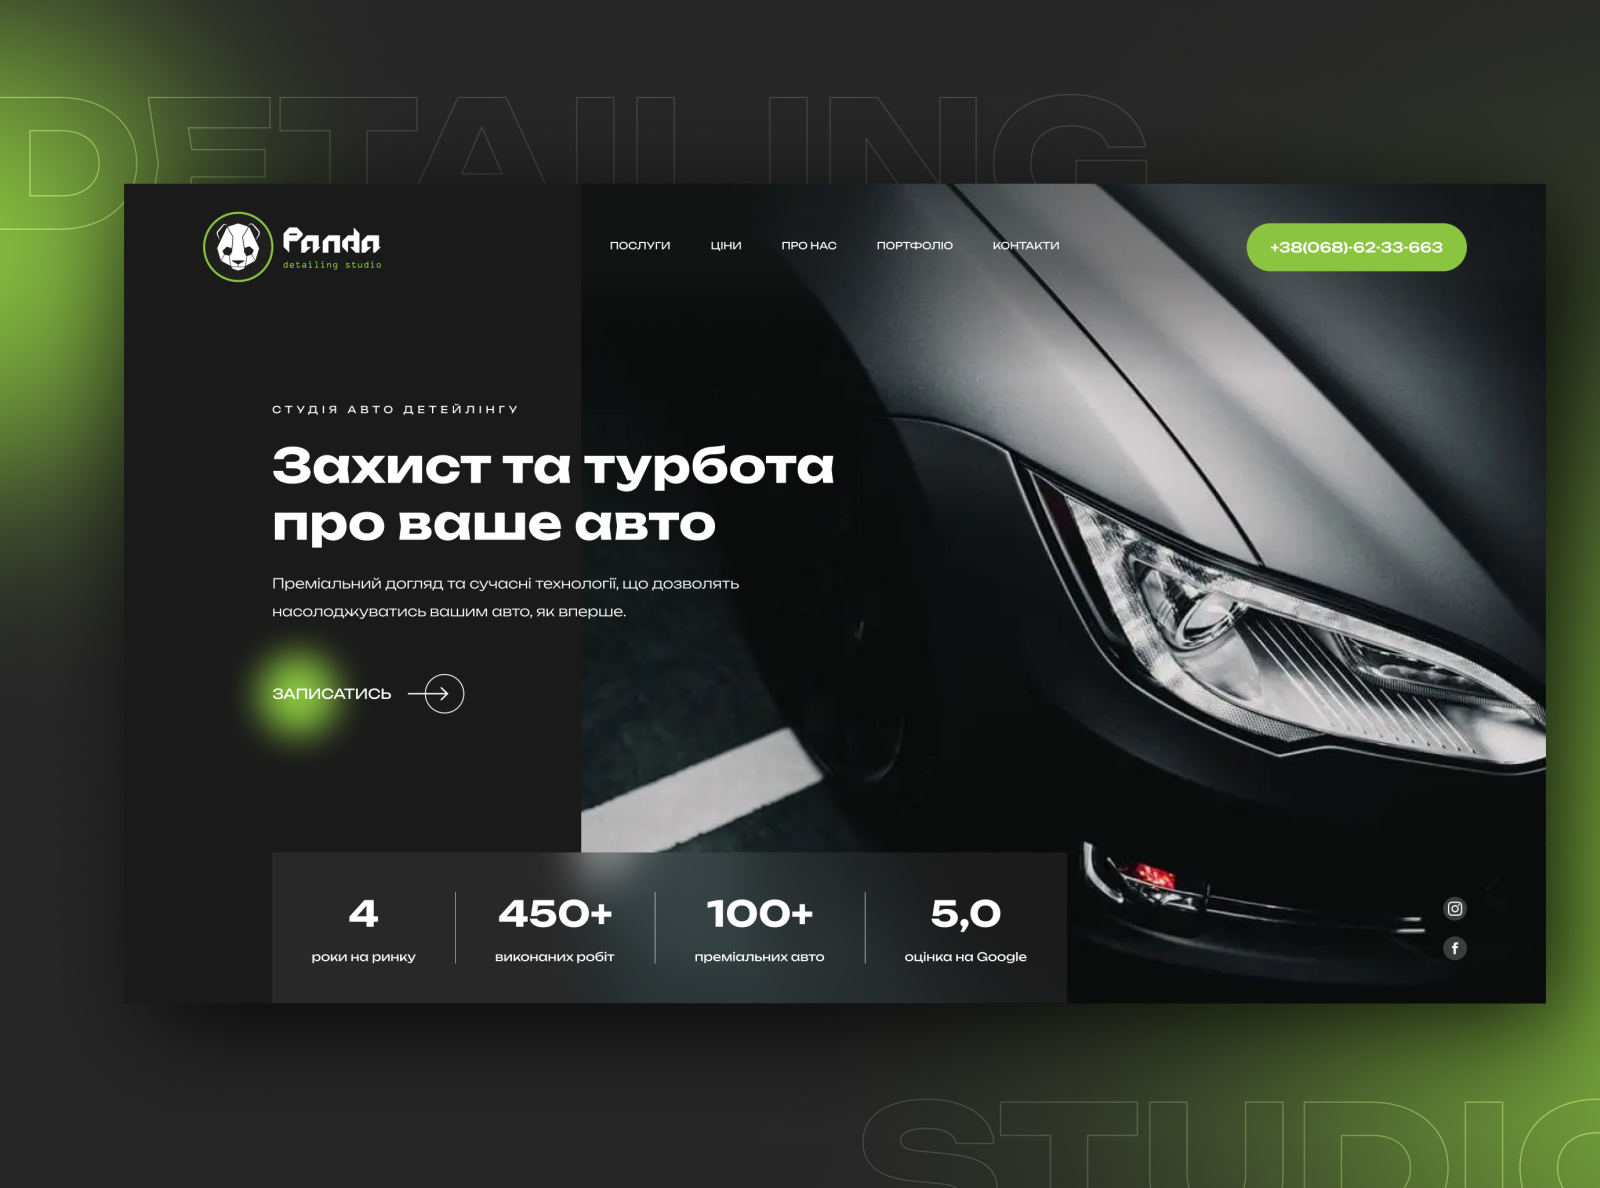 PANDA - Car detailing studio - website design by Svitlana Zabeida on  Dribbble